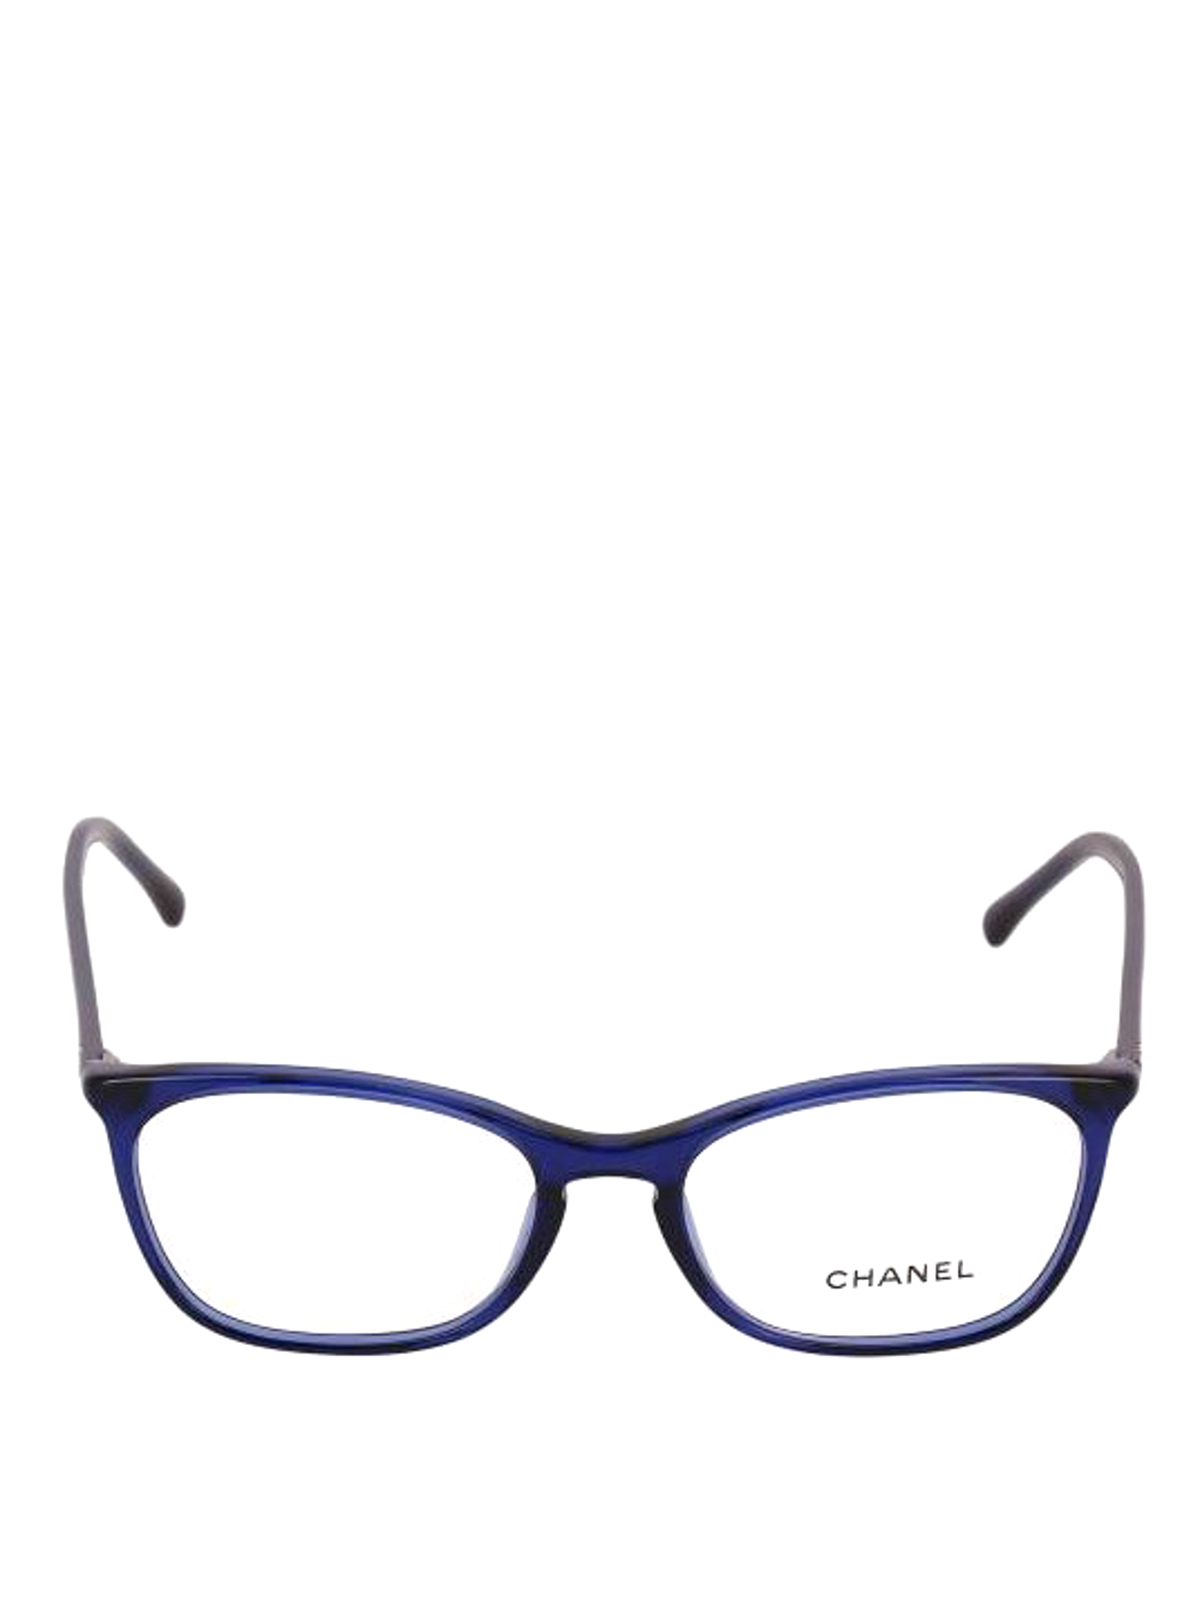 Electric blue acetate optical glasses